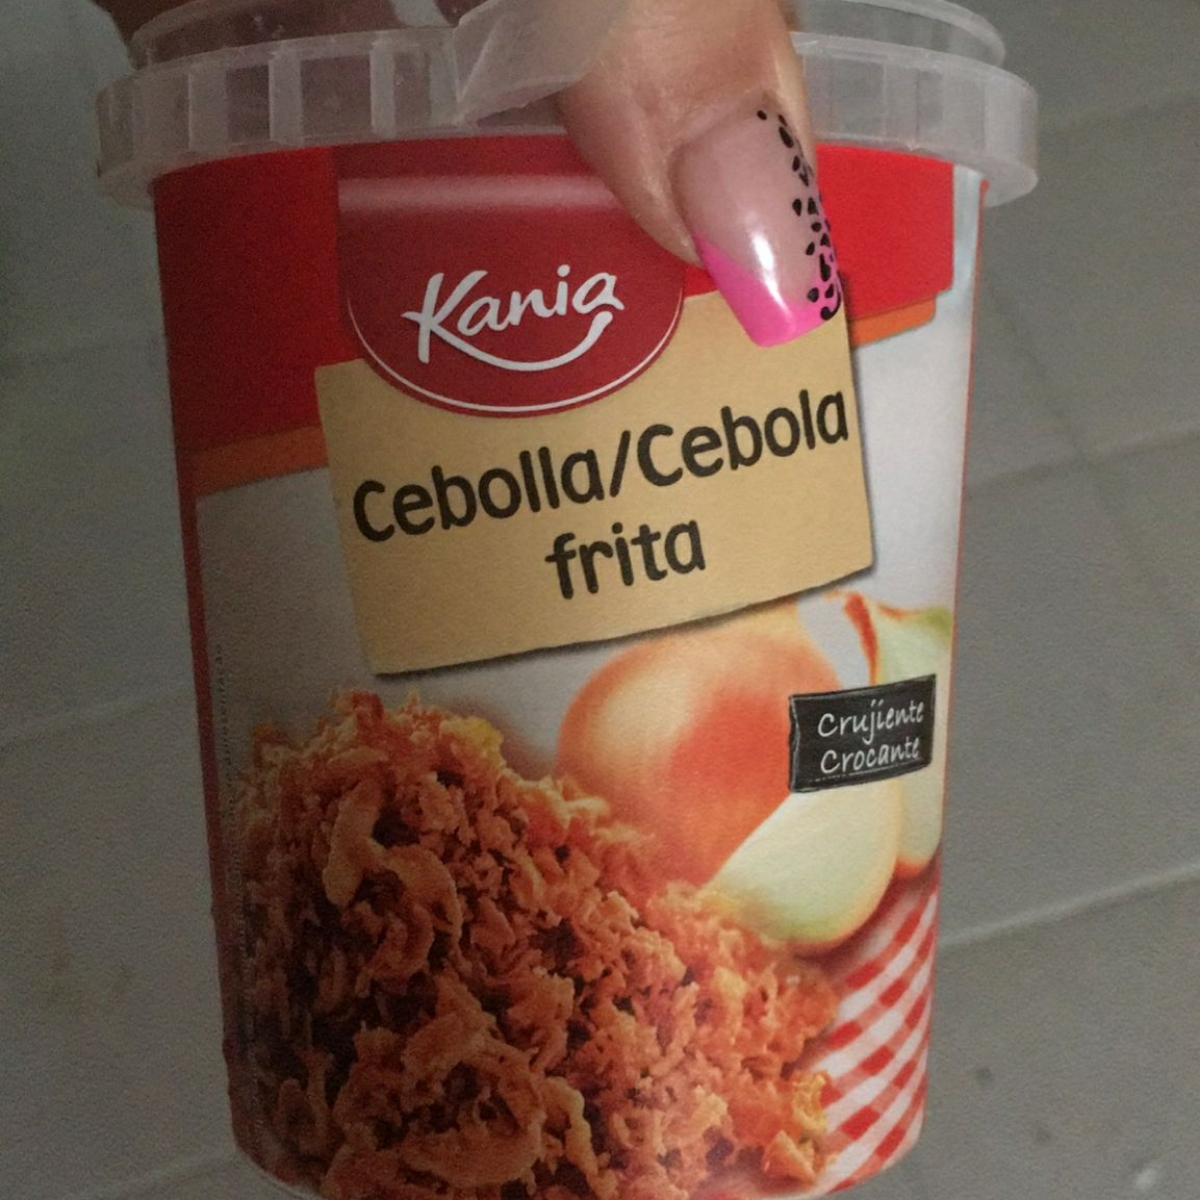 Cebolla frita - Kania - 150g